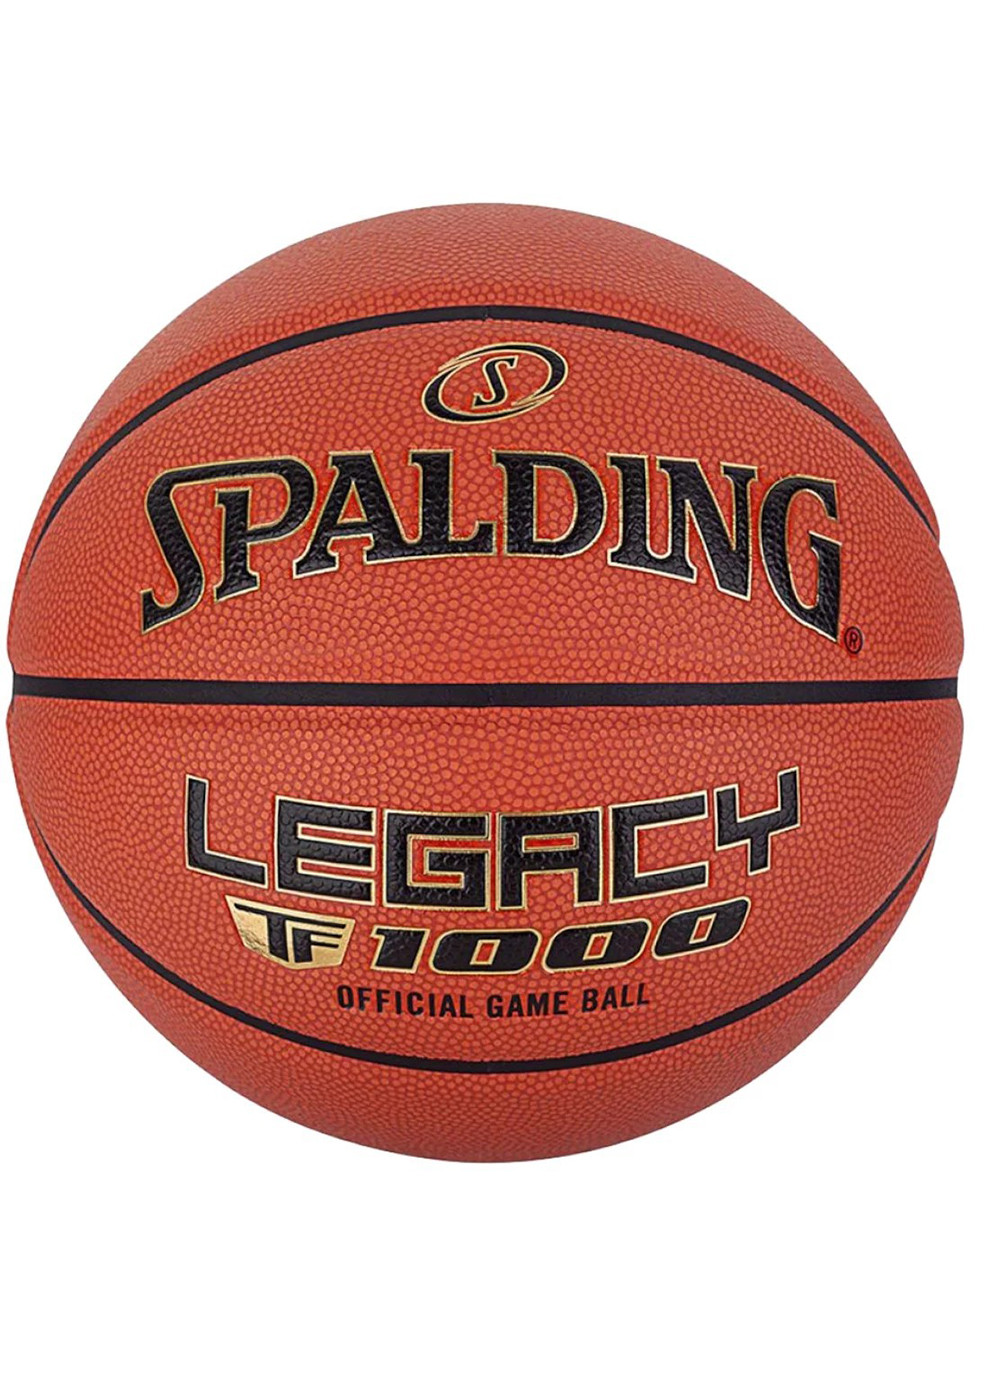 М'яч баскетбольний TF-1000 Legacy FIBA помаранчевий Spalding (260633768)